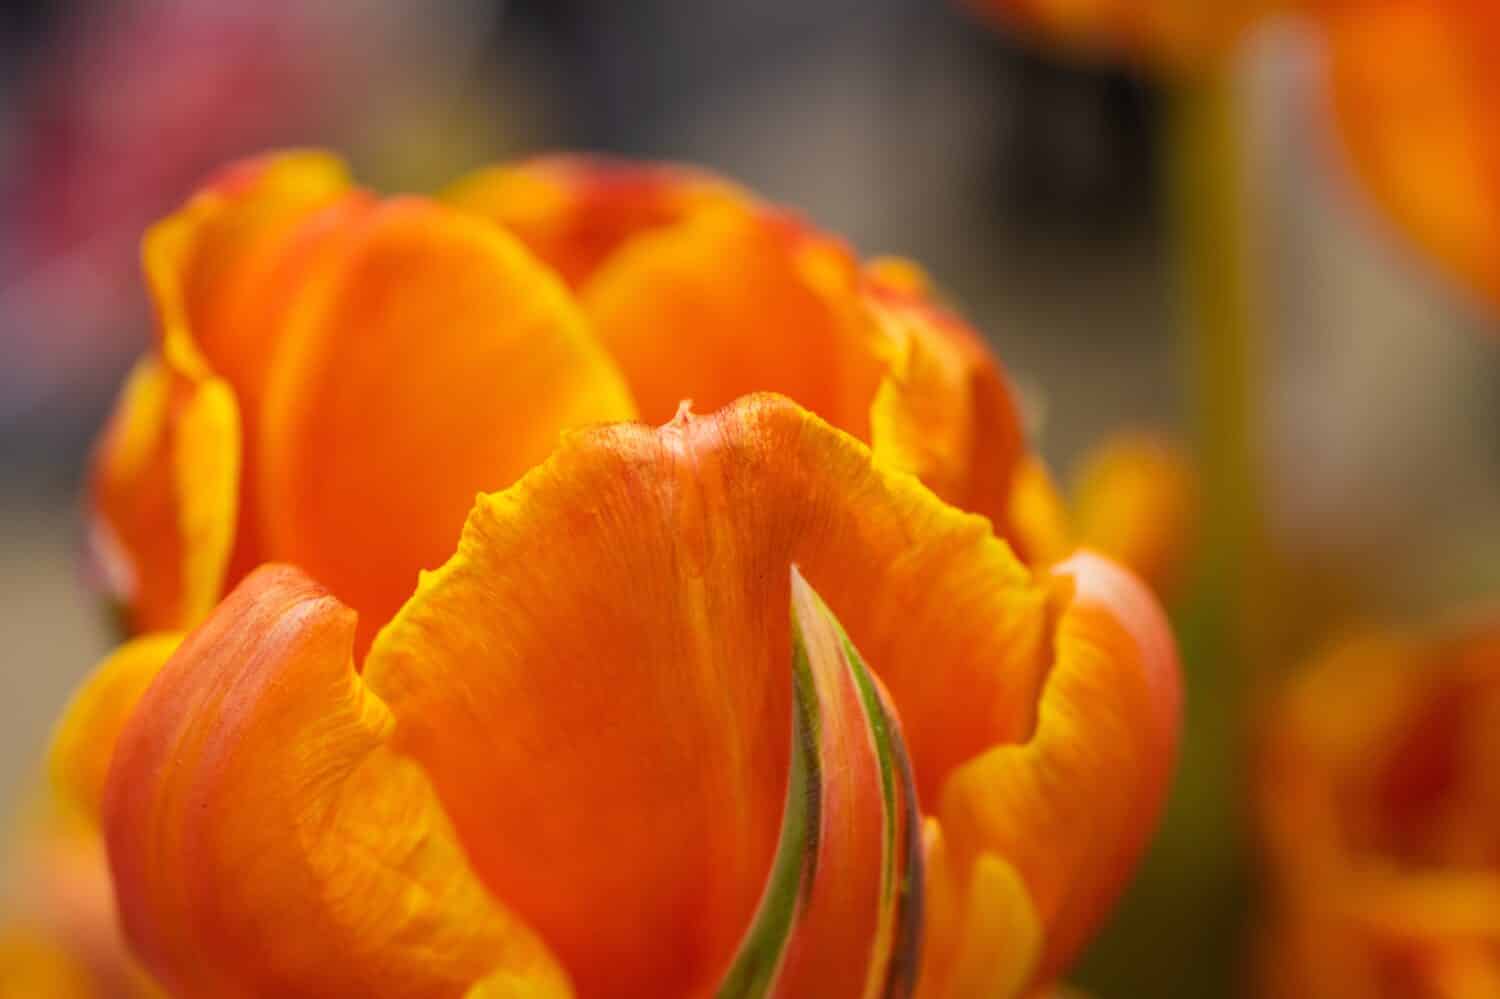  orange parrot tulip in close-up. High quality photo